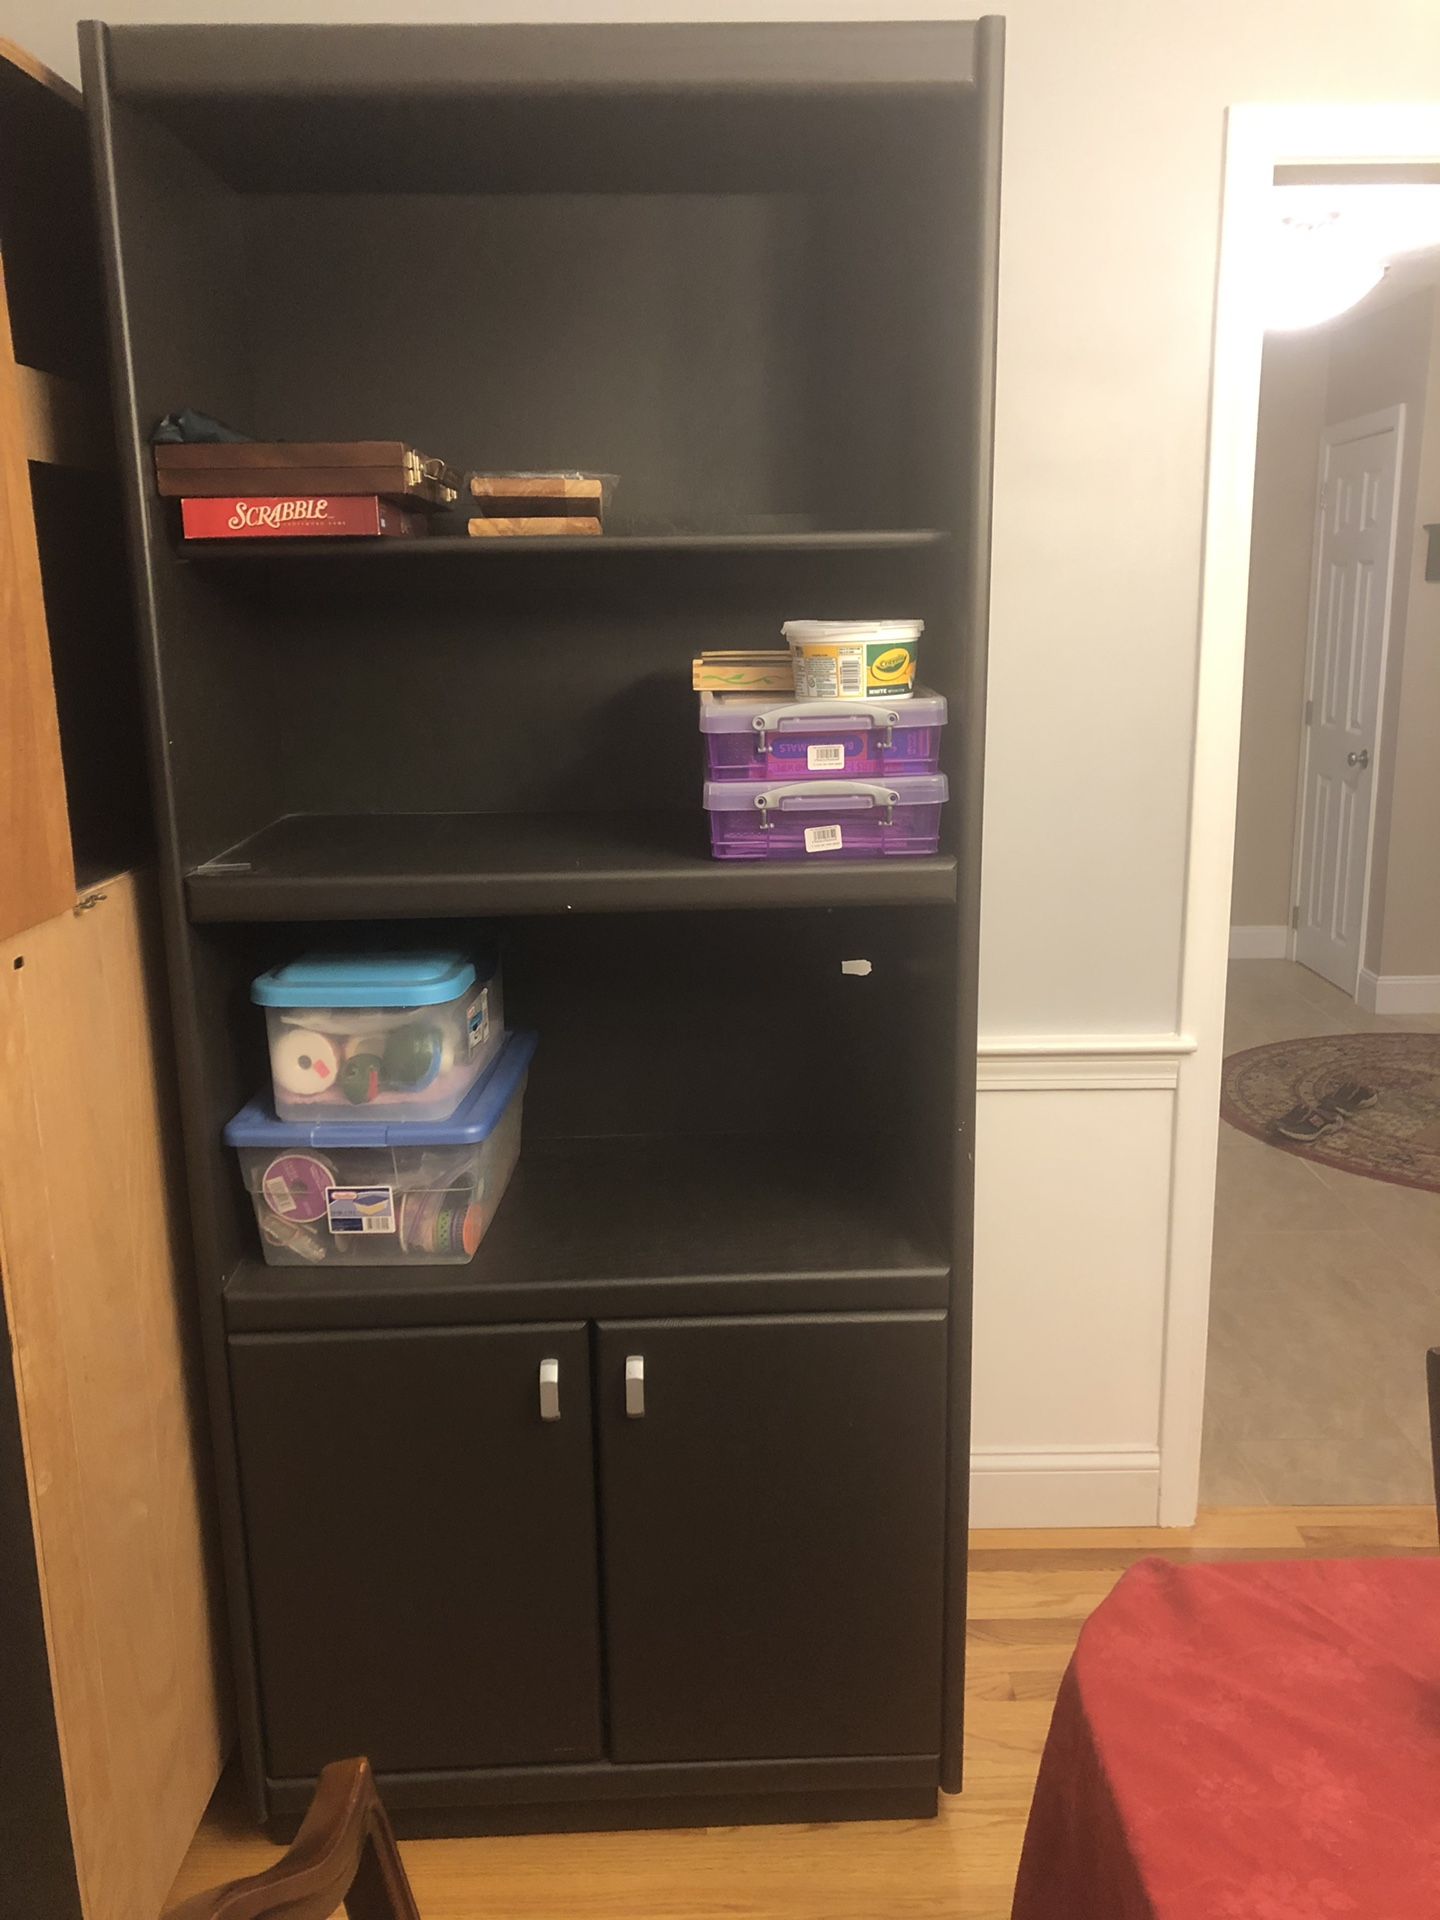 Two shelf/cabinet units